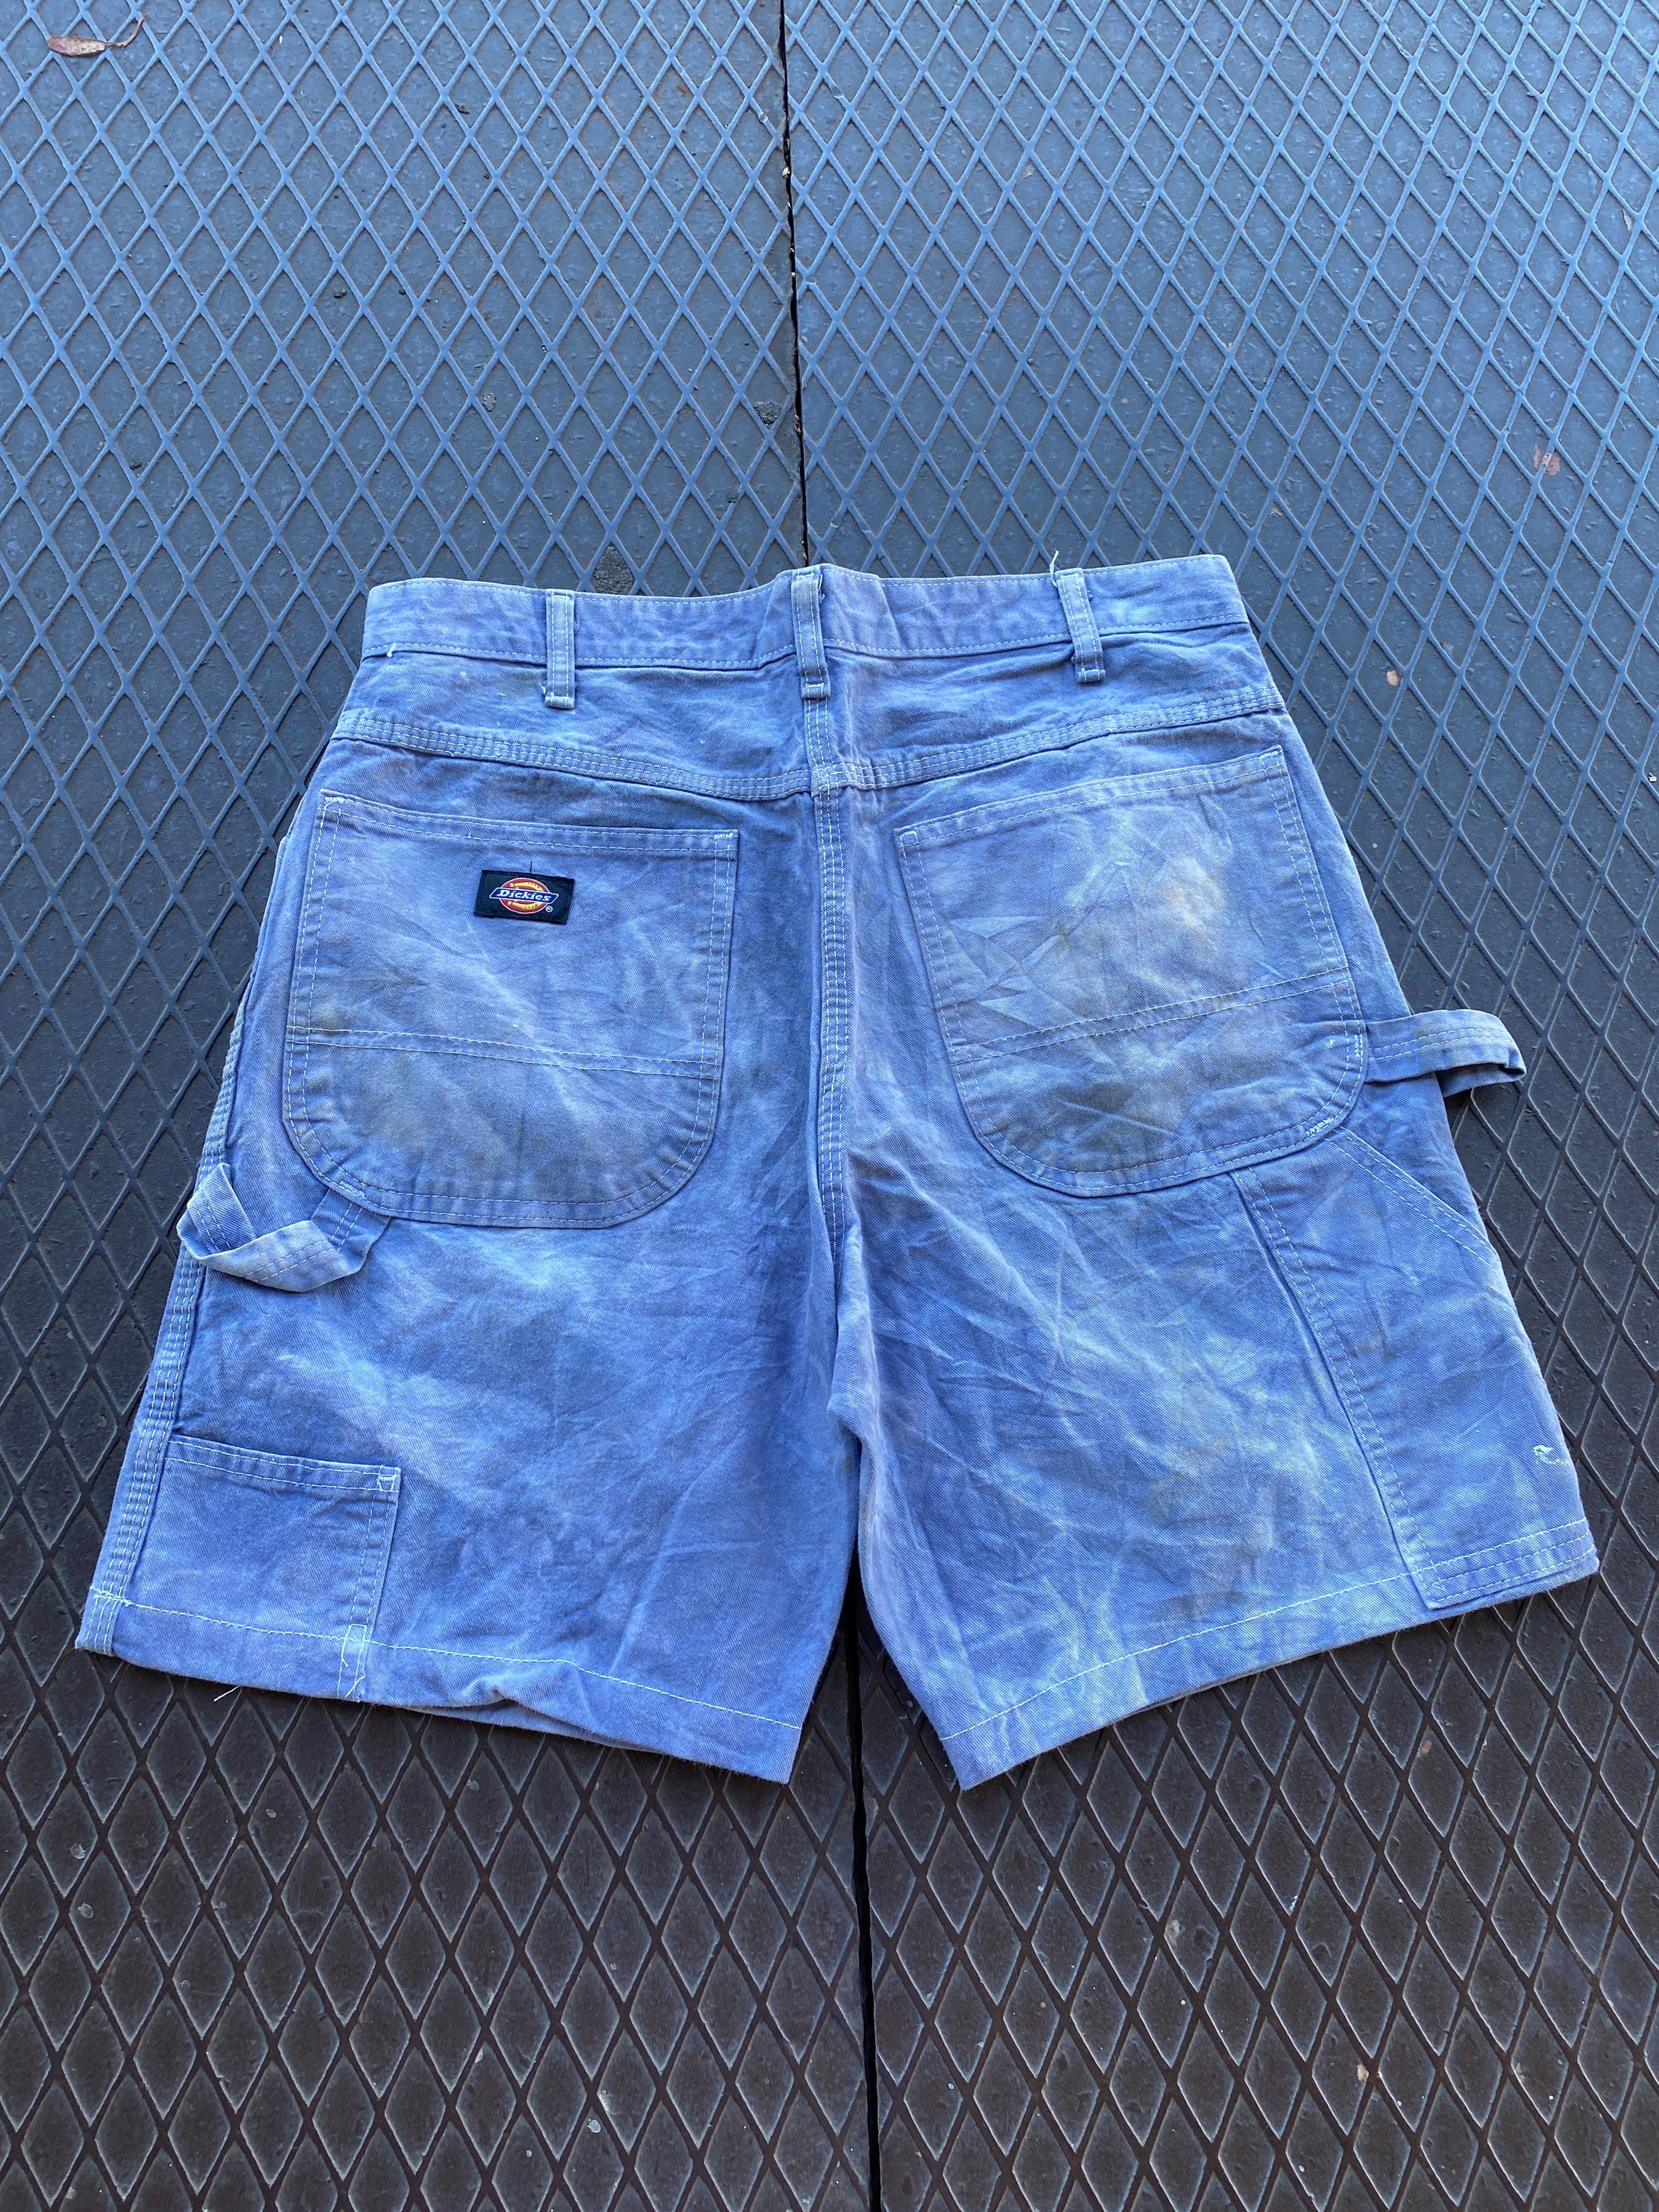 32 - Dickies Carpenter Shorts Faded Blue Tie-Dye